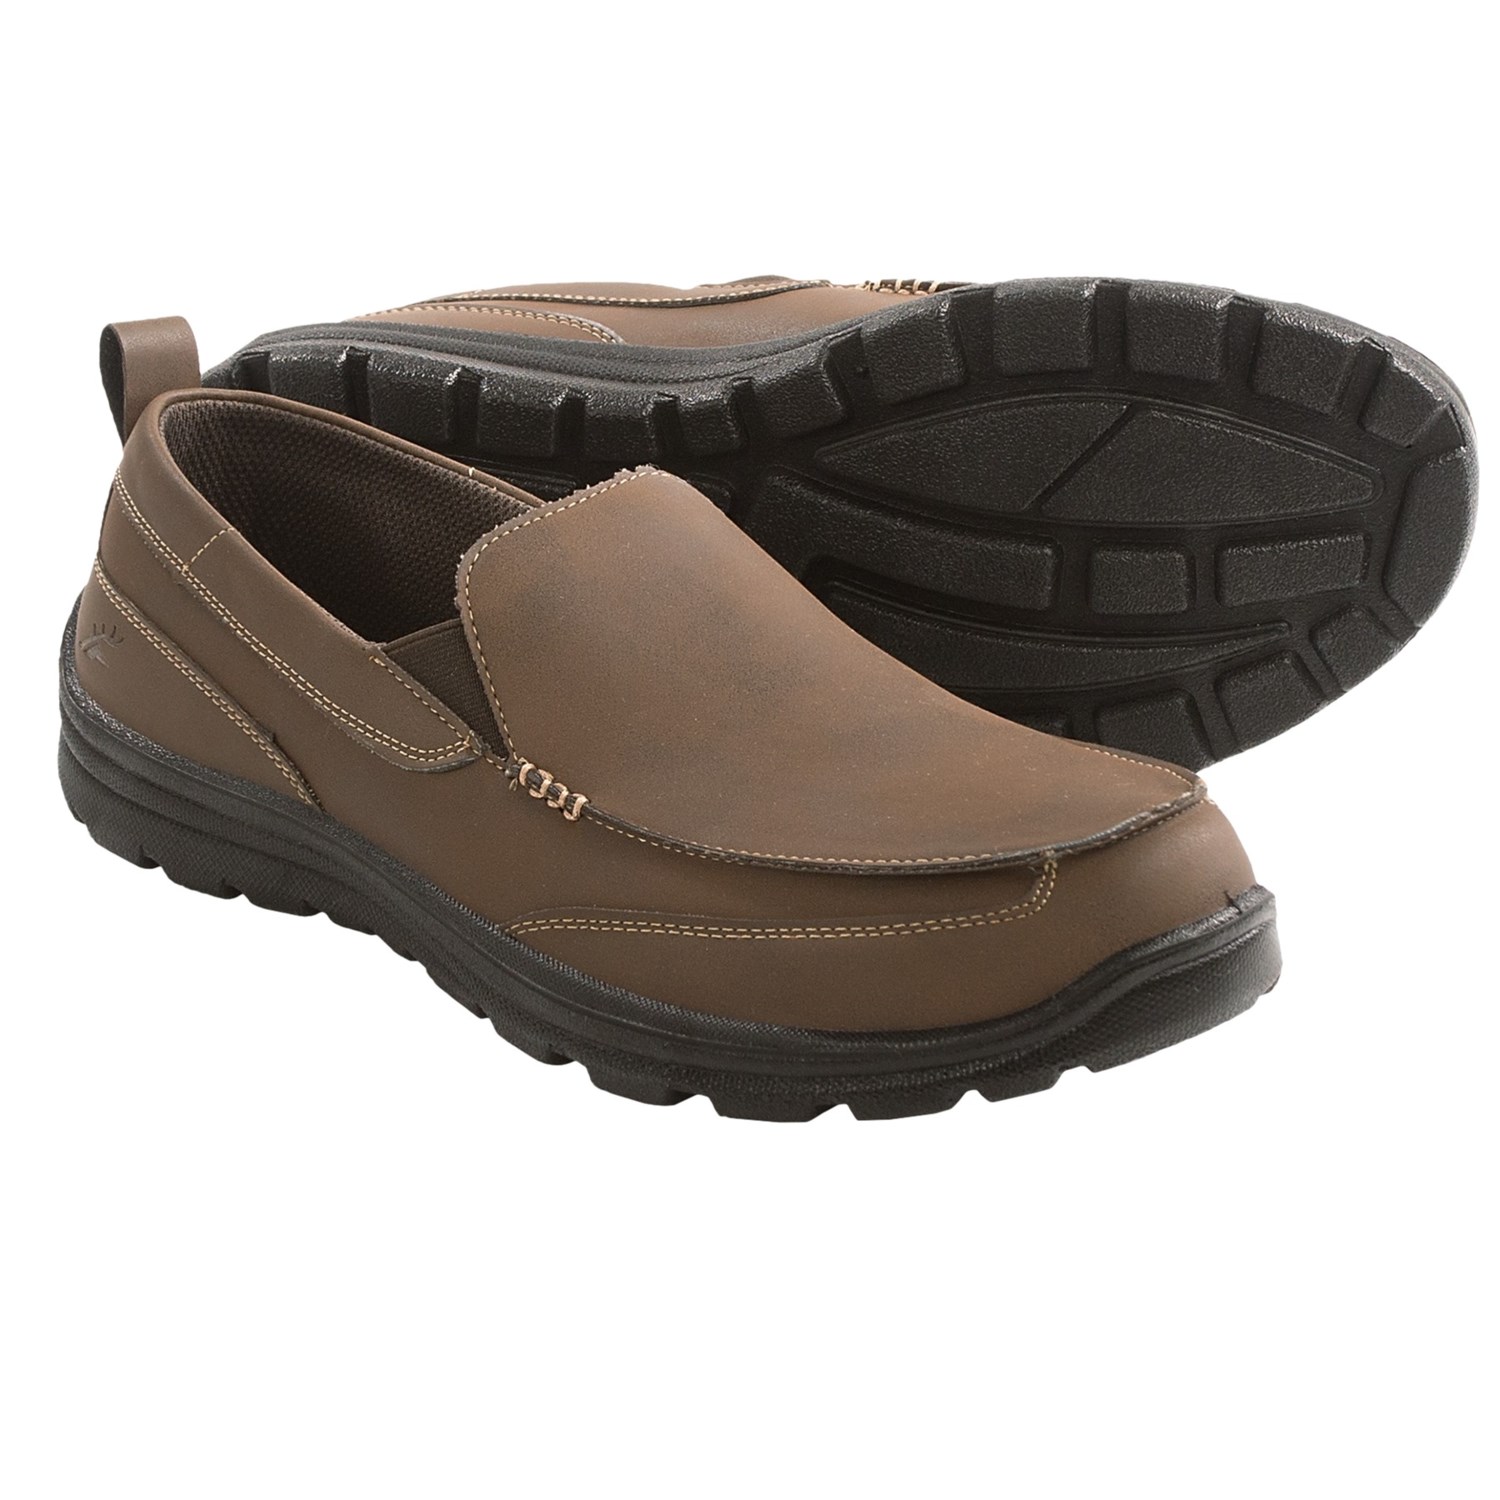 Deer Stags Everest Shoes - Slip-Ons (For Men) in Brown